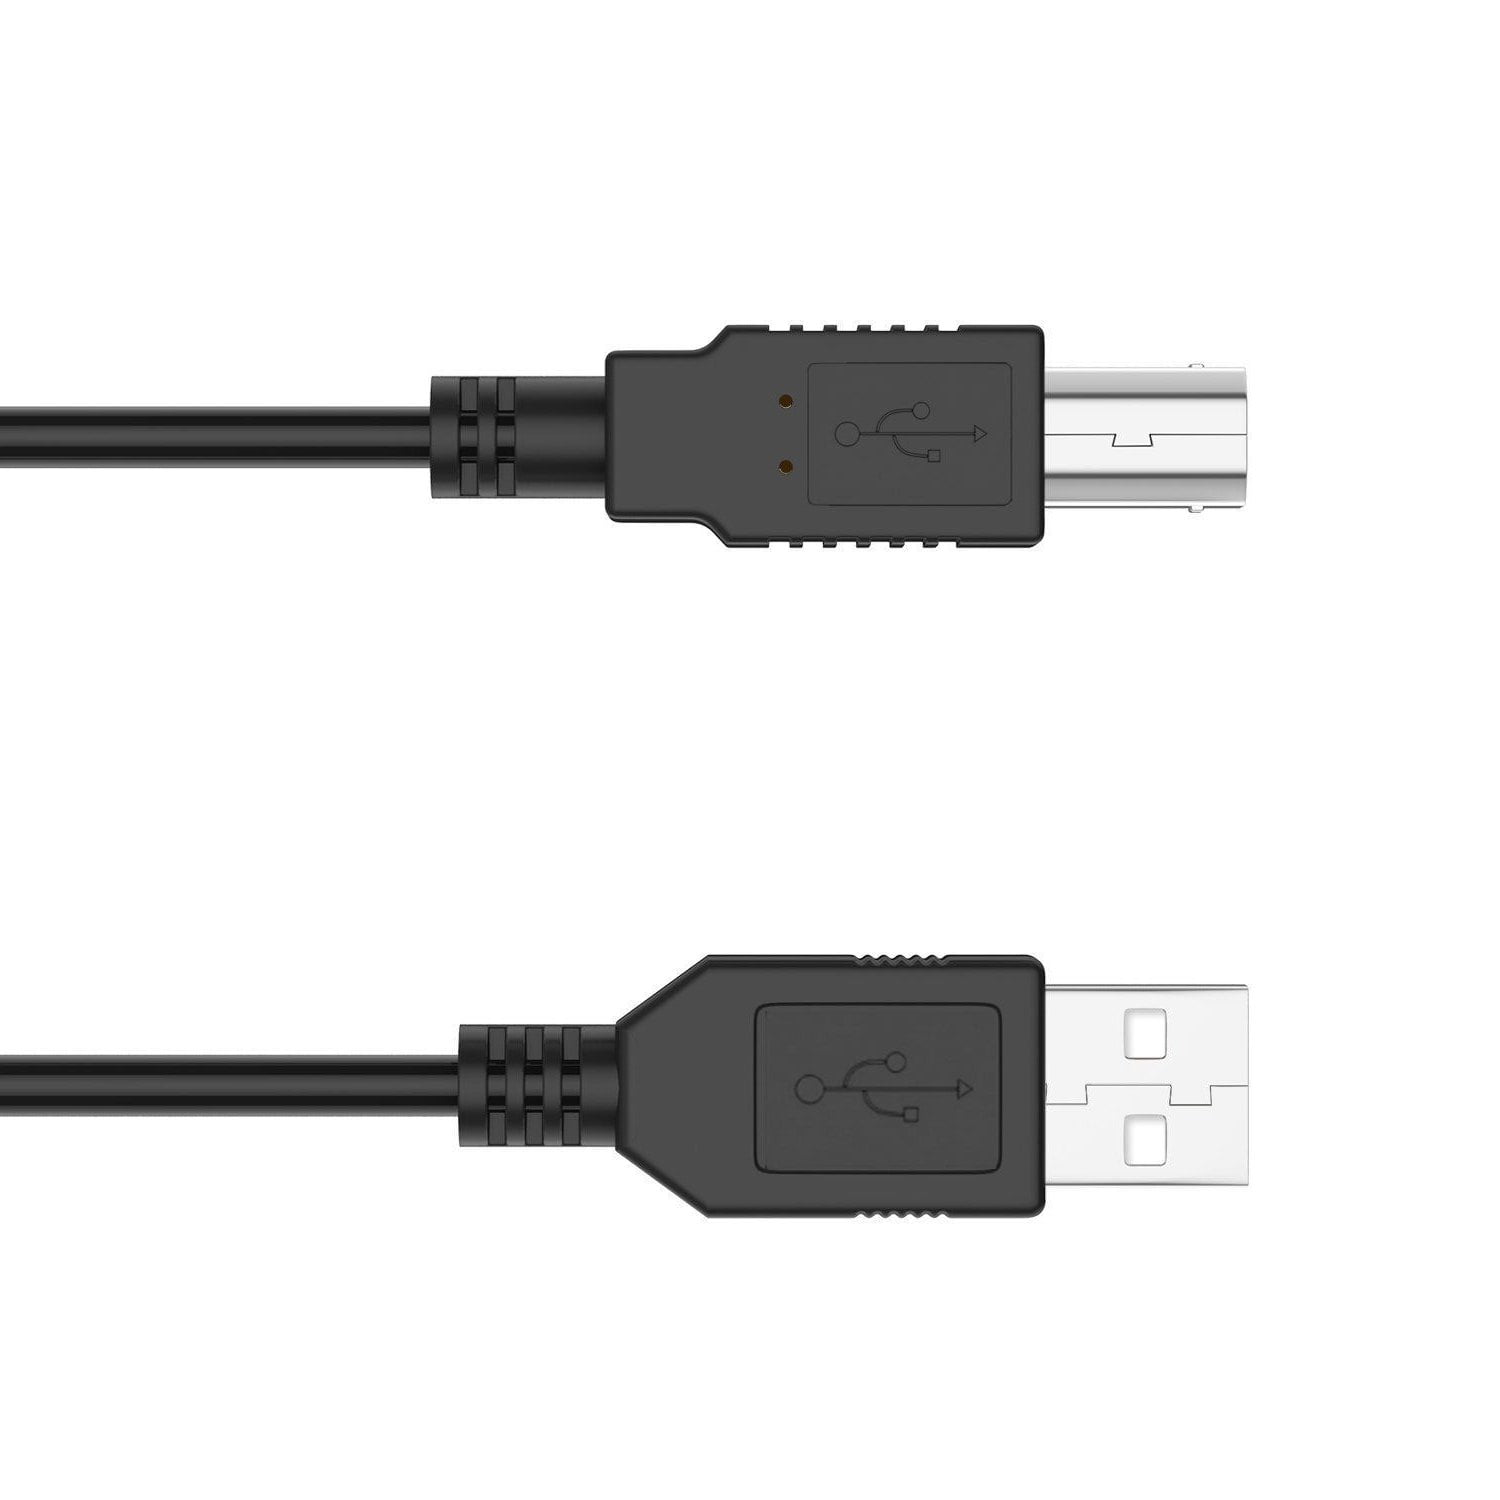 MPK249 USB DATA CABLE CORD FOR AKAI PROFESSIONAL MPK MINI MKII MPK225 MPK261 